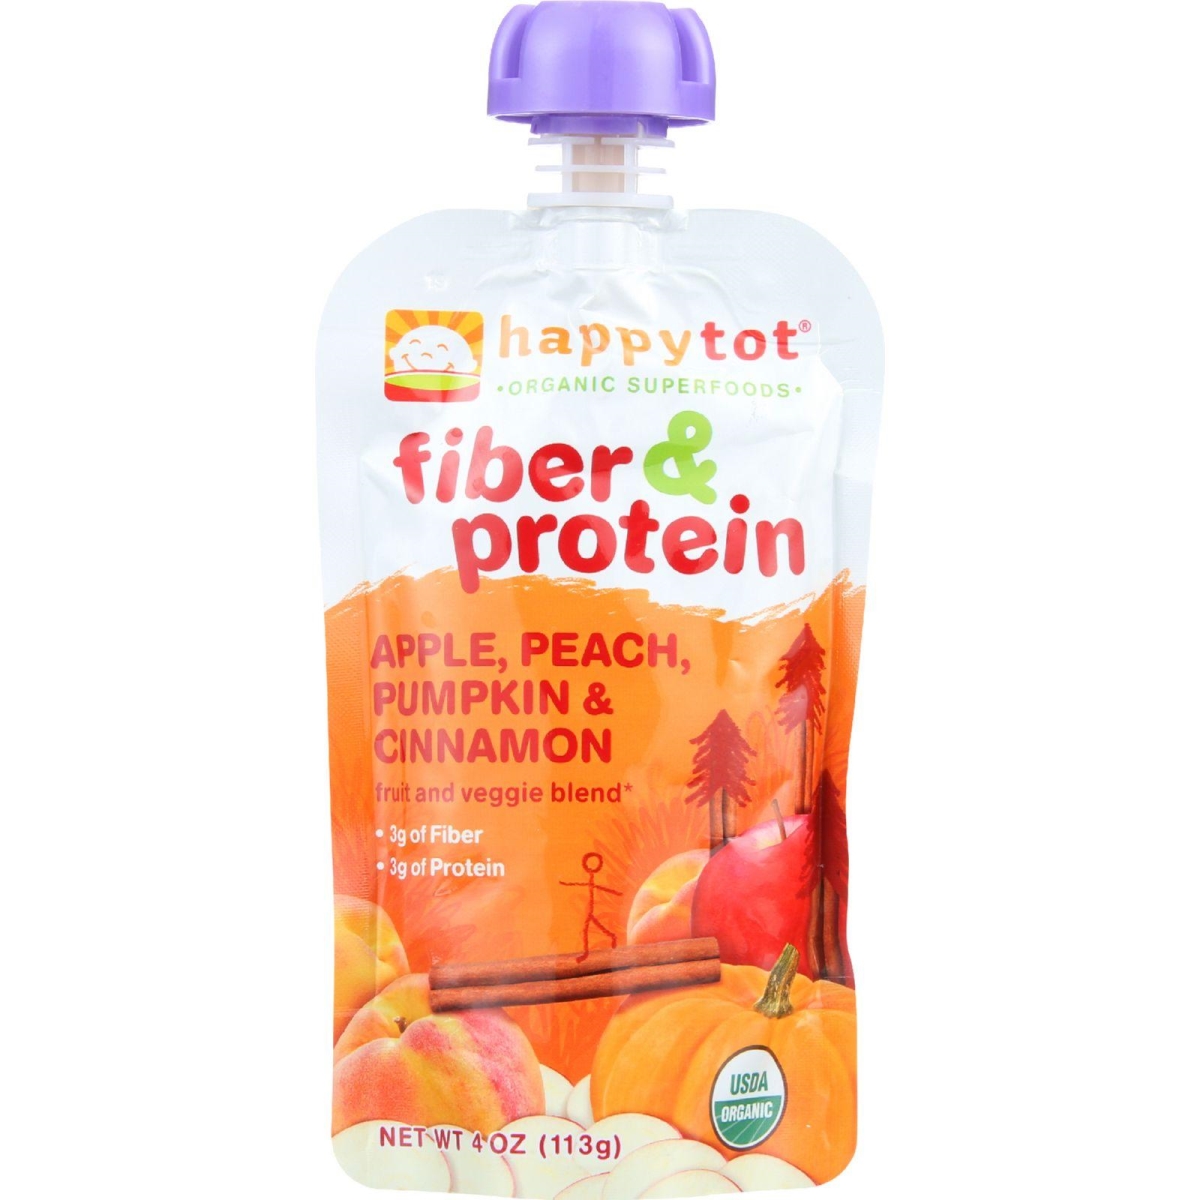 HG1624840 4 oz Organic Fiber & Protein Stage 4 Apple Peach Pumpkin & Cinnamon Toddler Food, Case of 16 -  Happy Tot